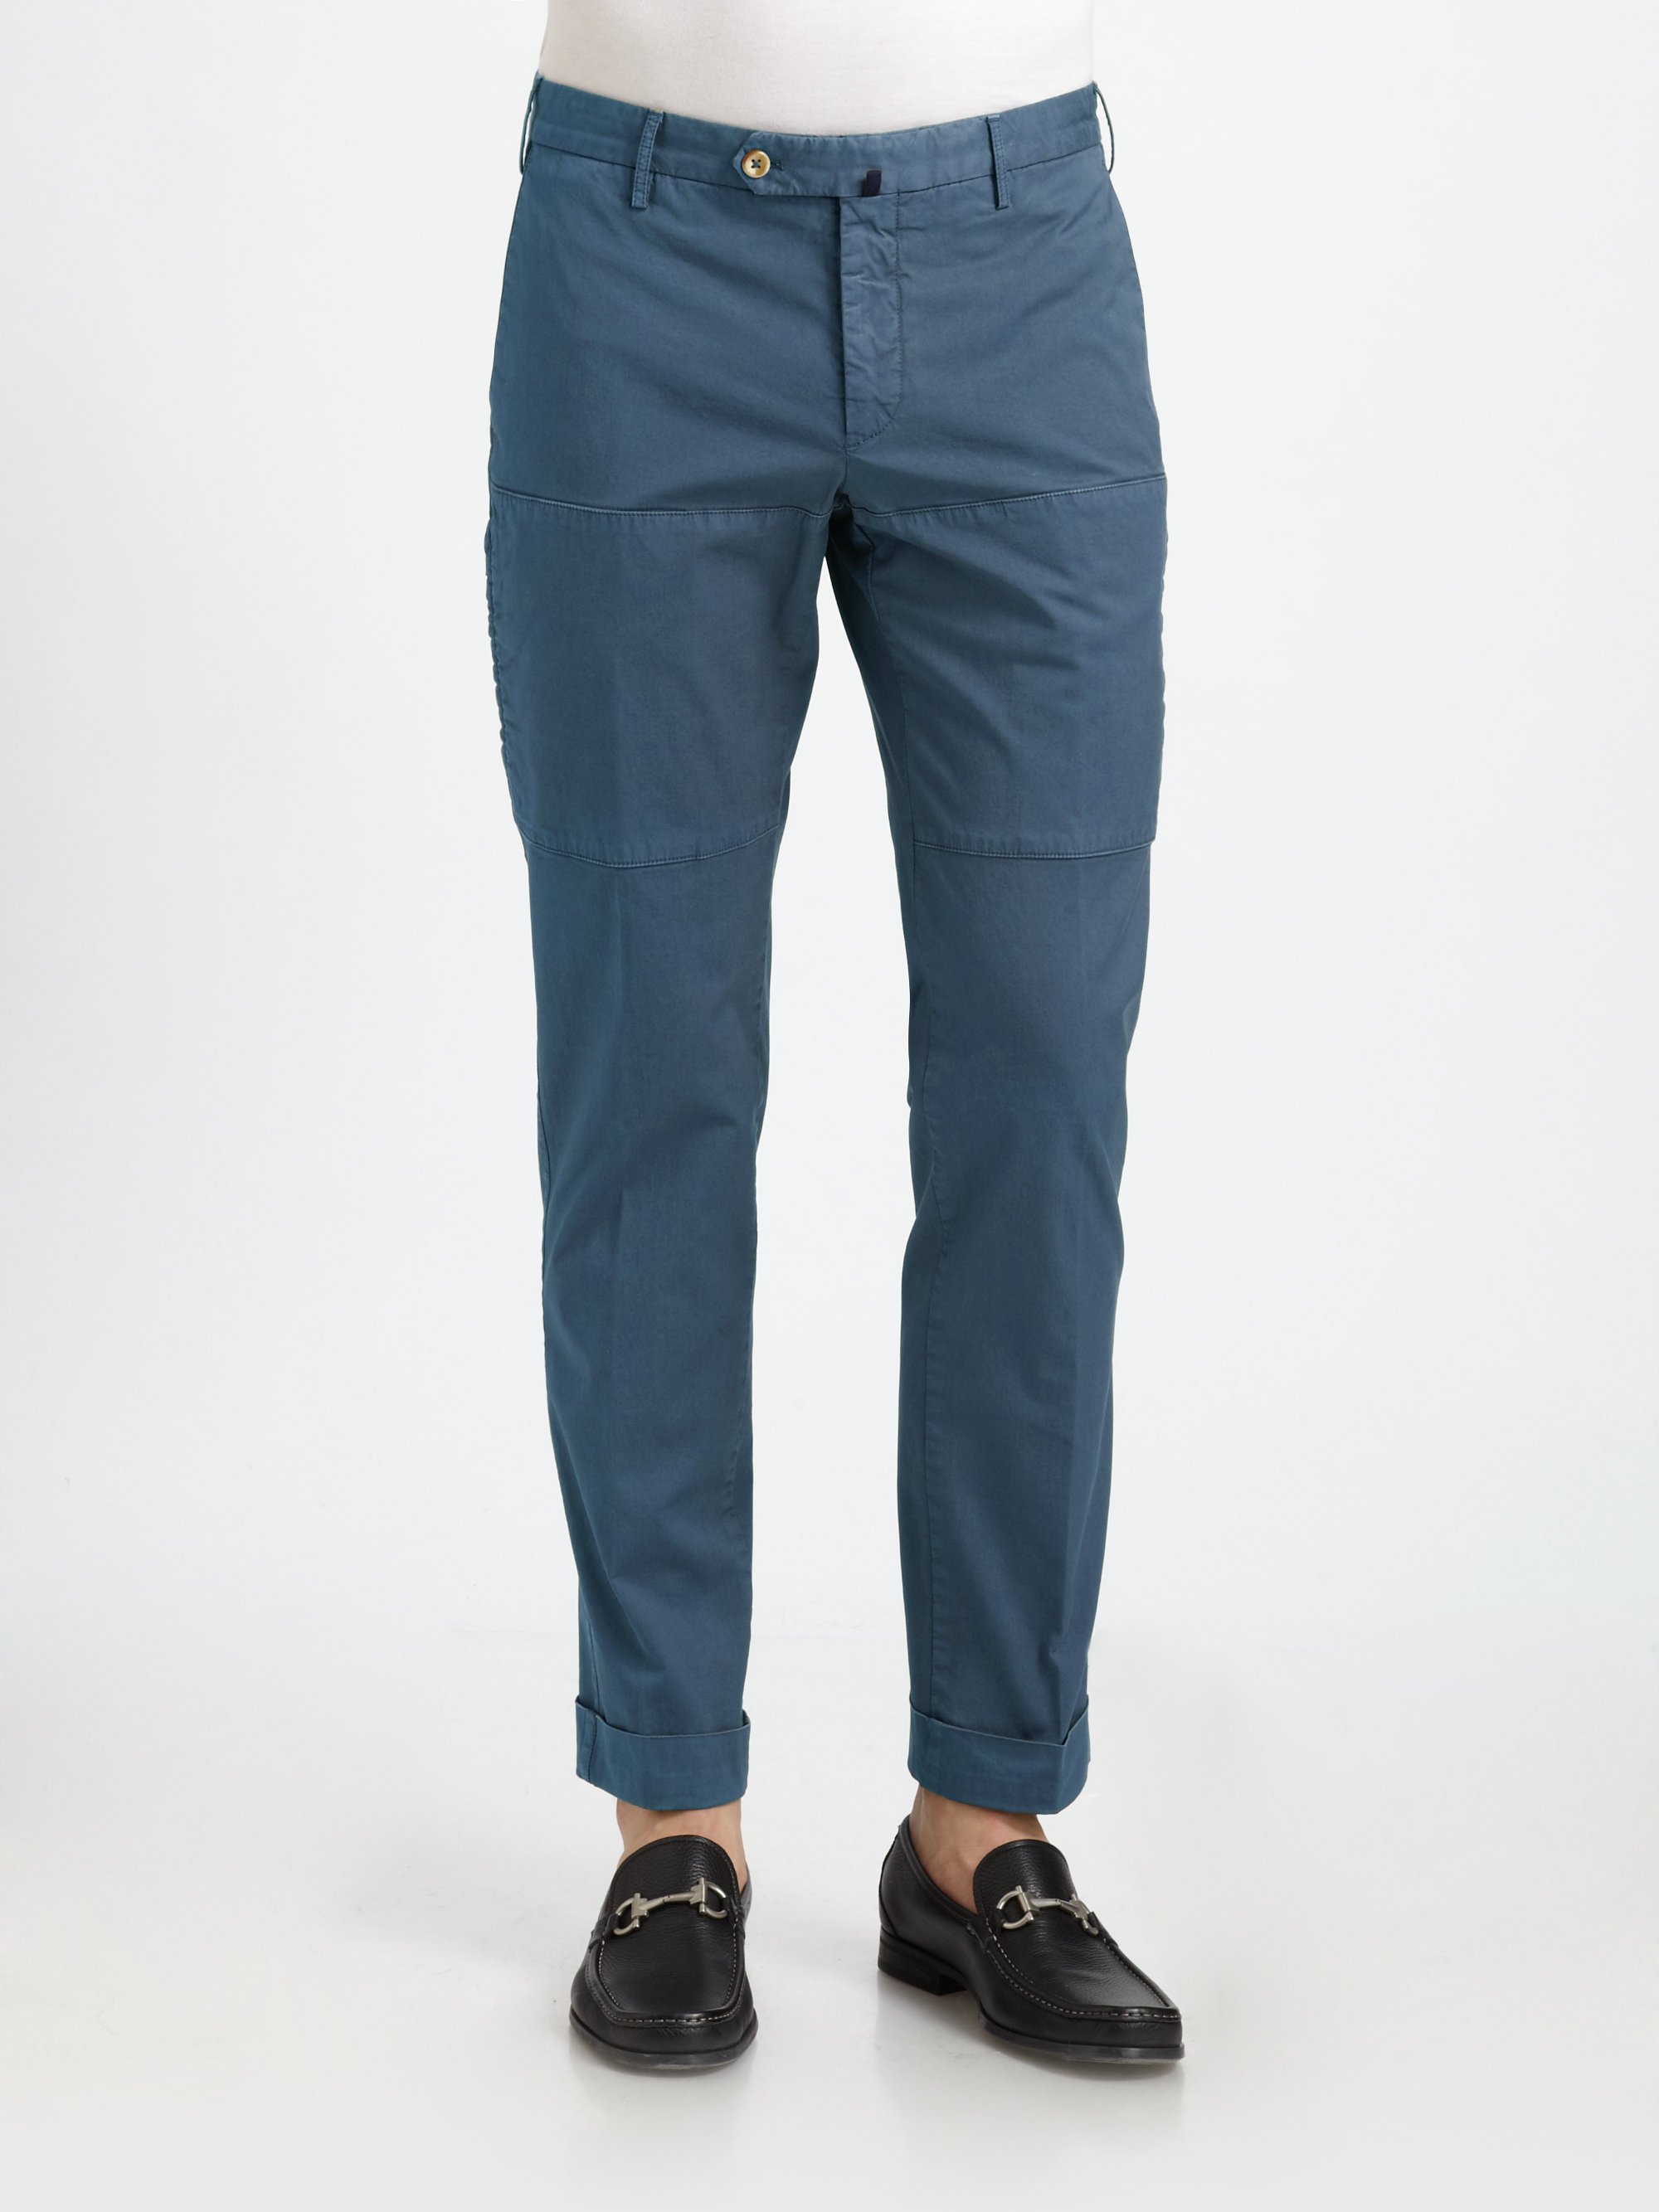 Incotex Italian-Fit Cargo Pants in Navy (Blue) for Men - Lyst